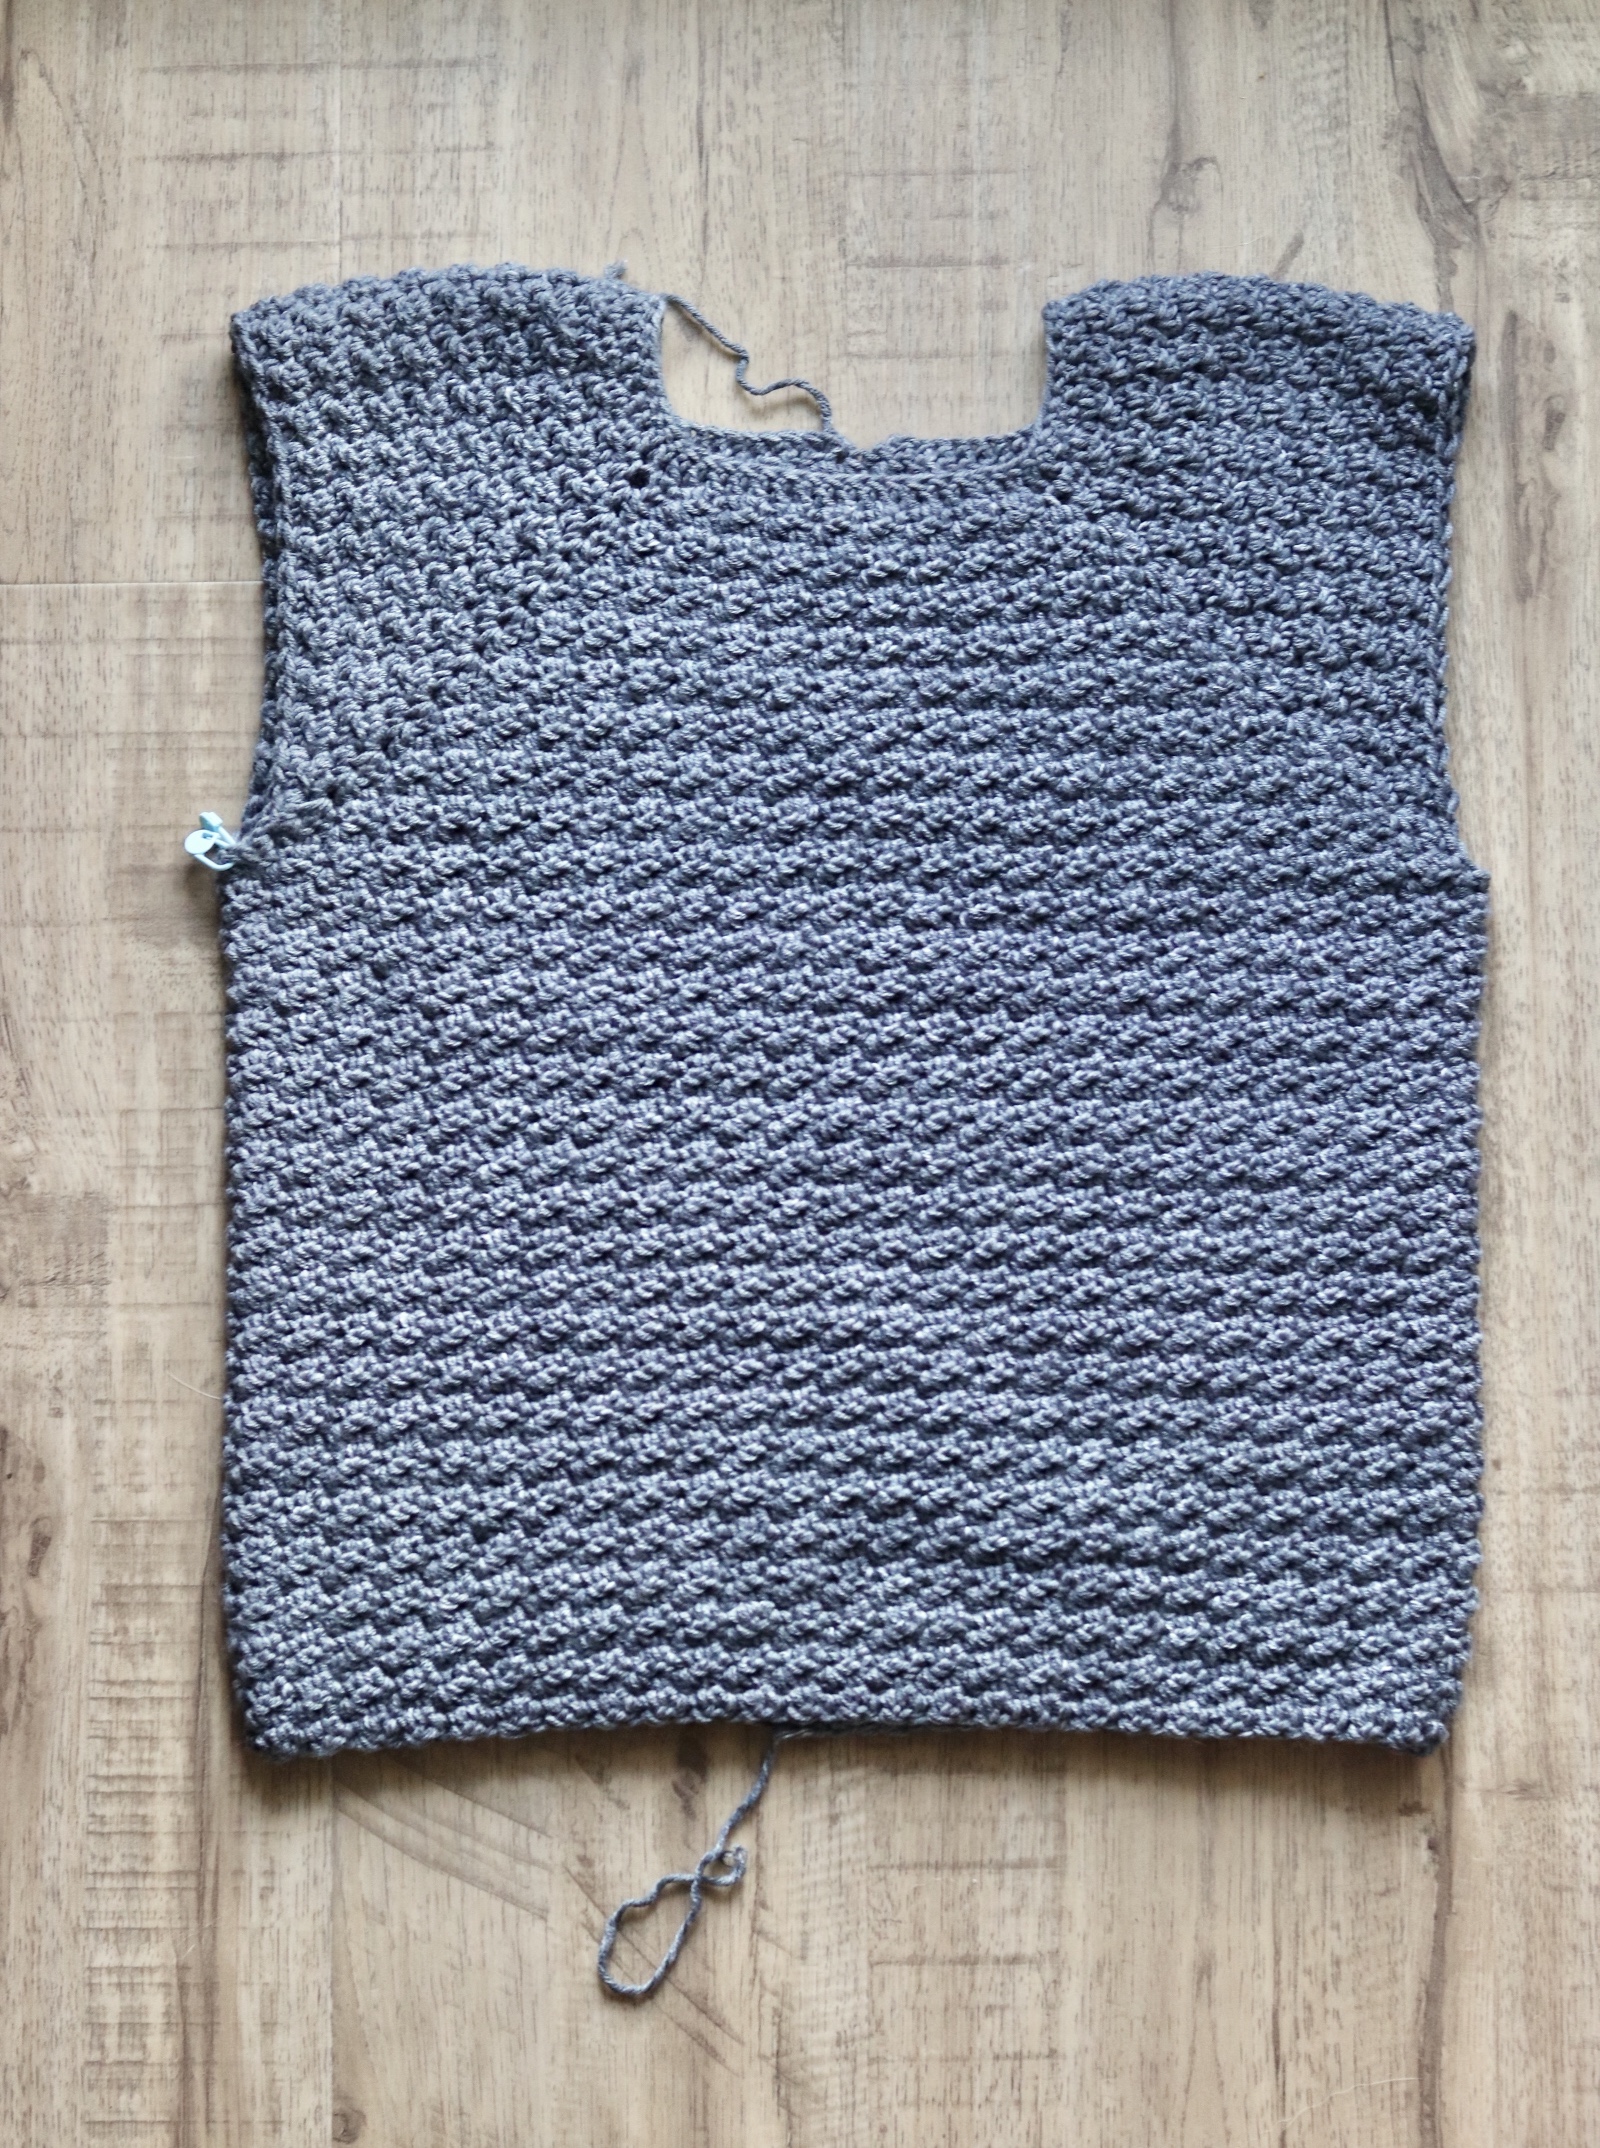 Designing My First Crochet Raglan - Knits 'N Knots